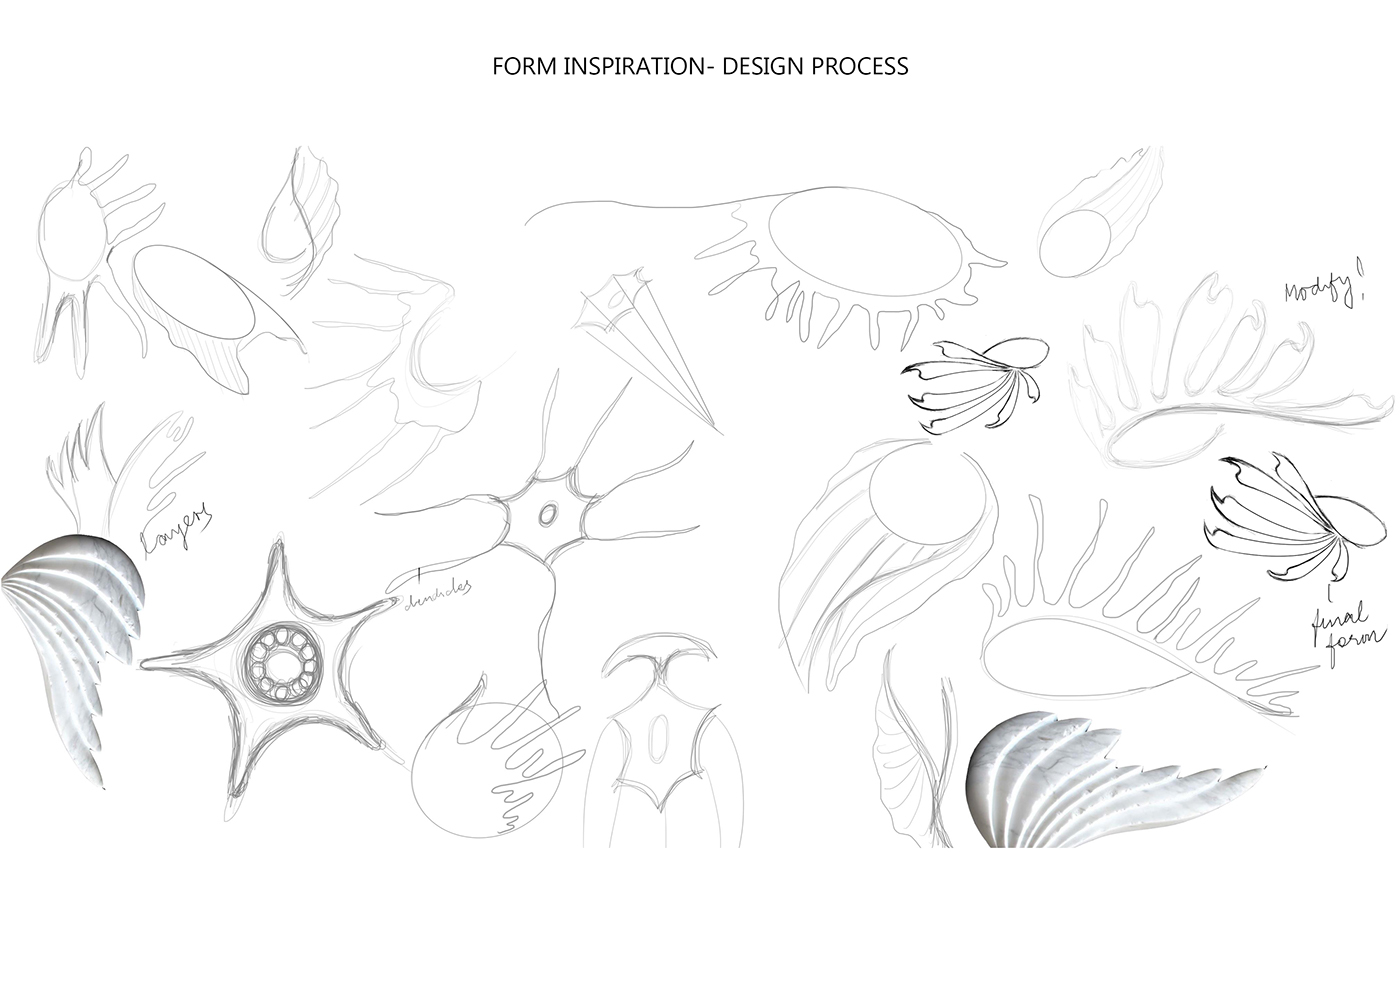 product design  inspiration design form generation lion fish